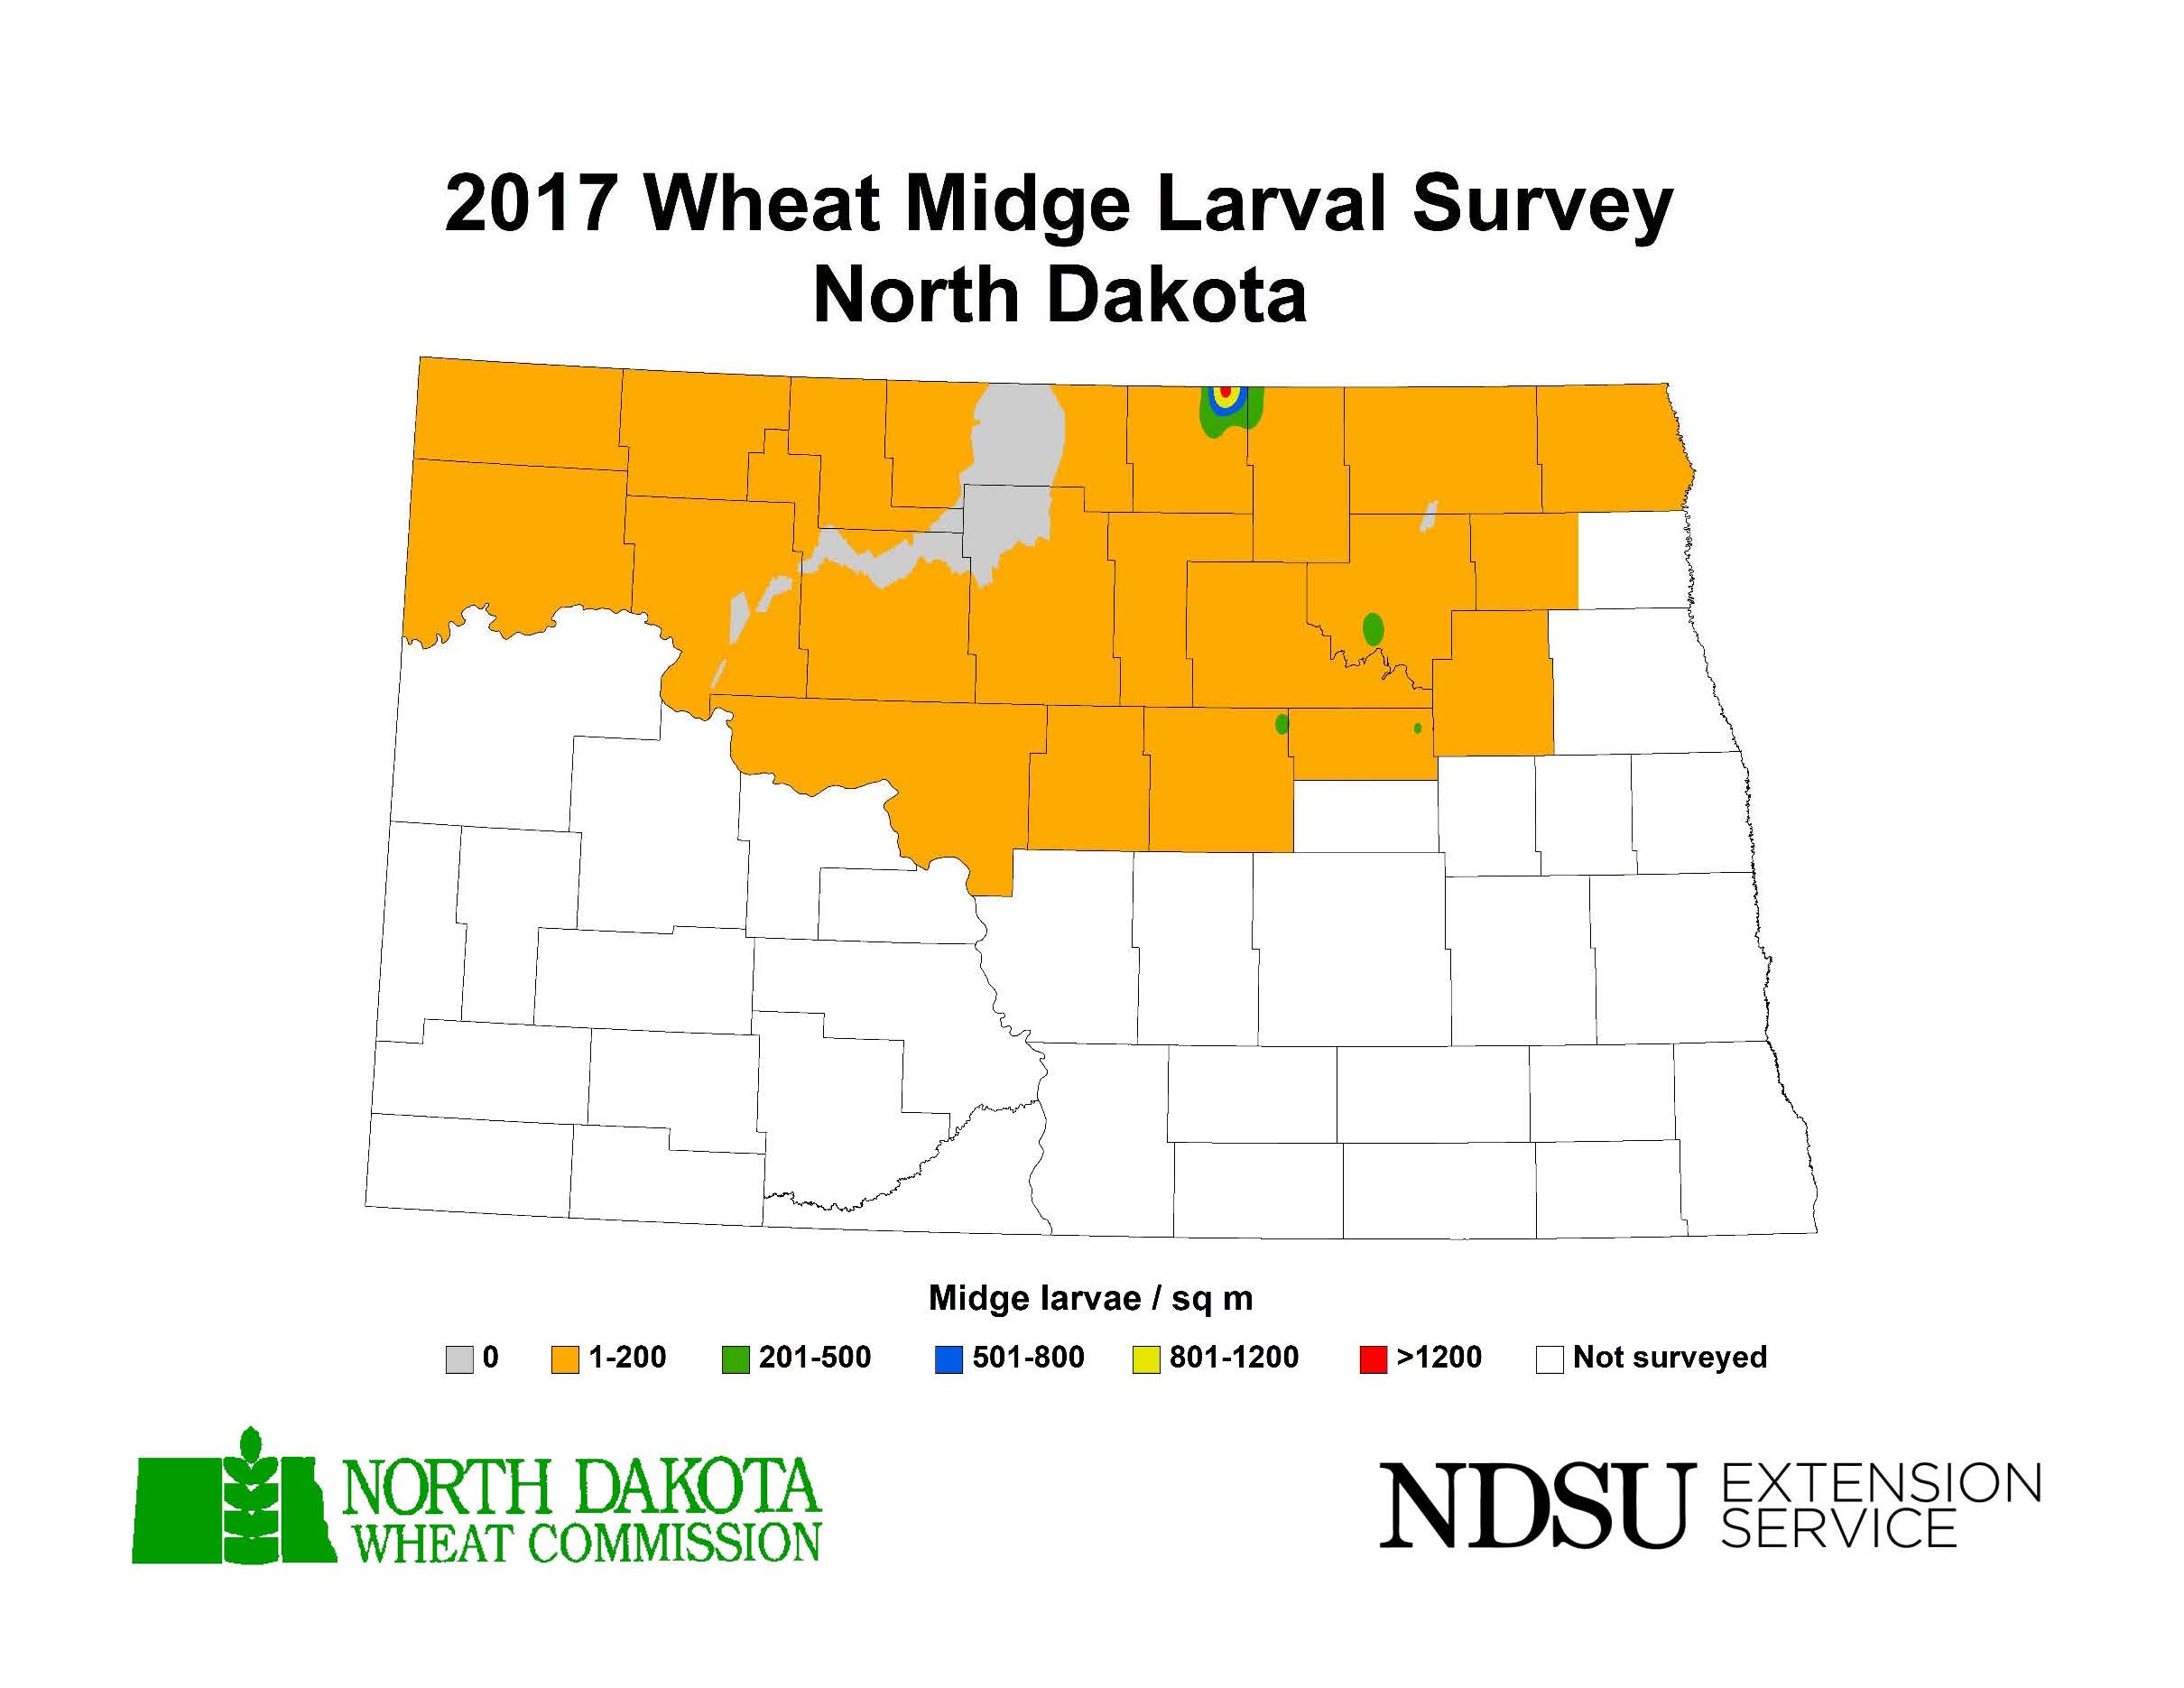 Map of North Dakota showing instances of wheat midge larvae in 2017